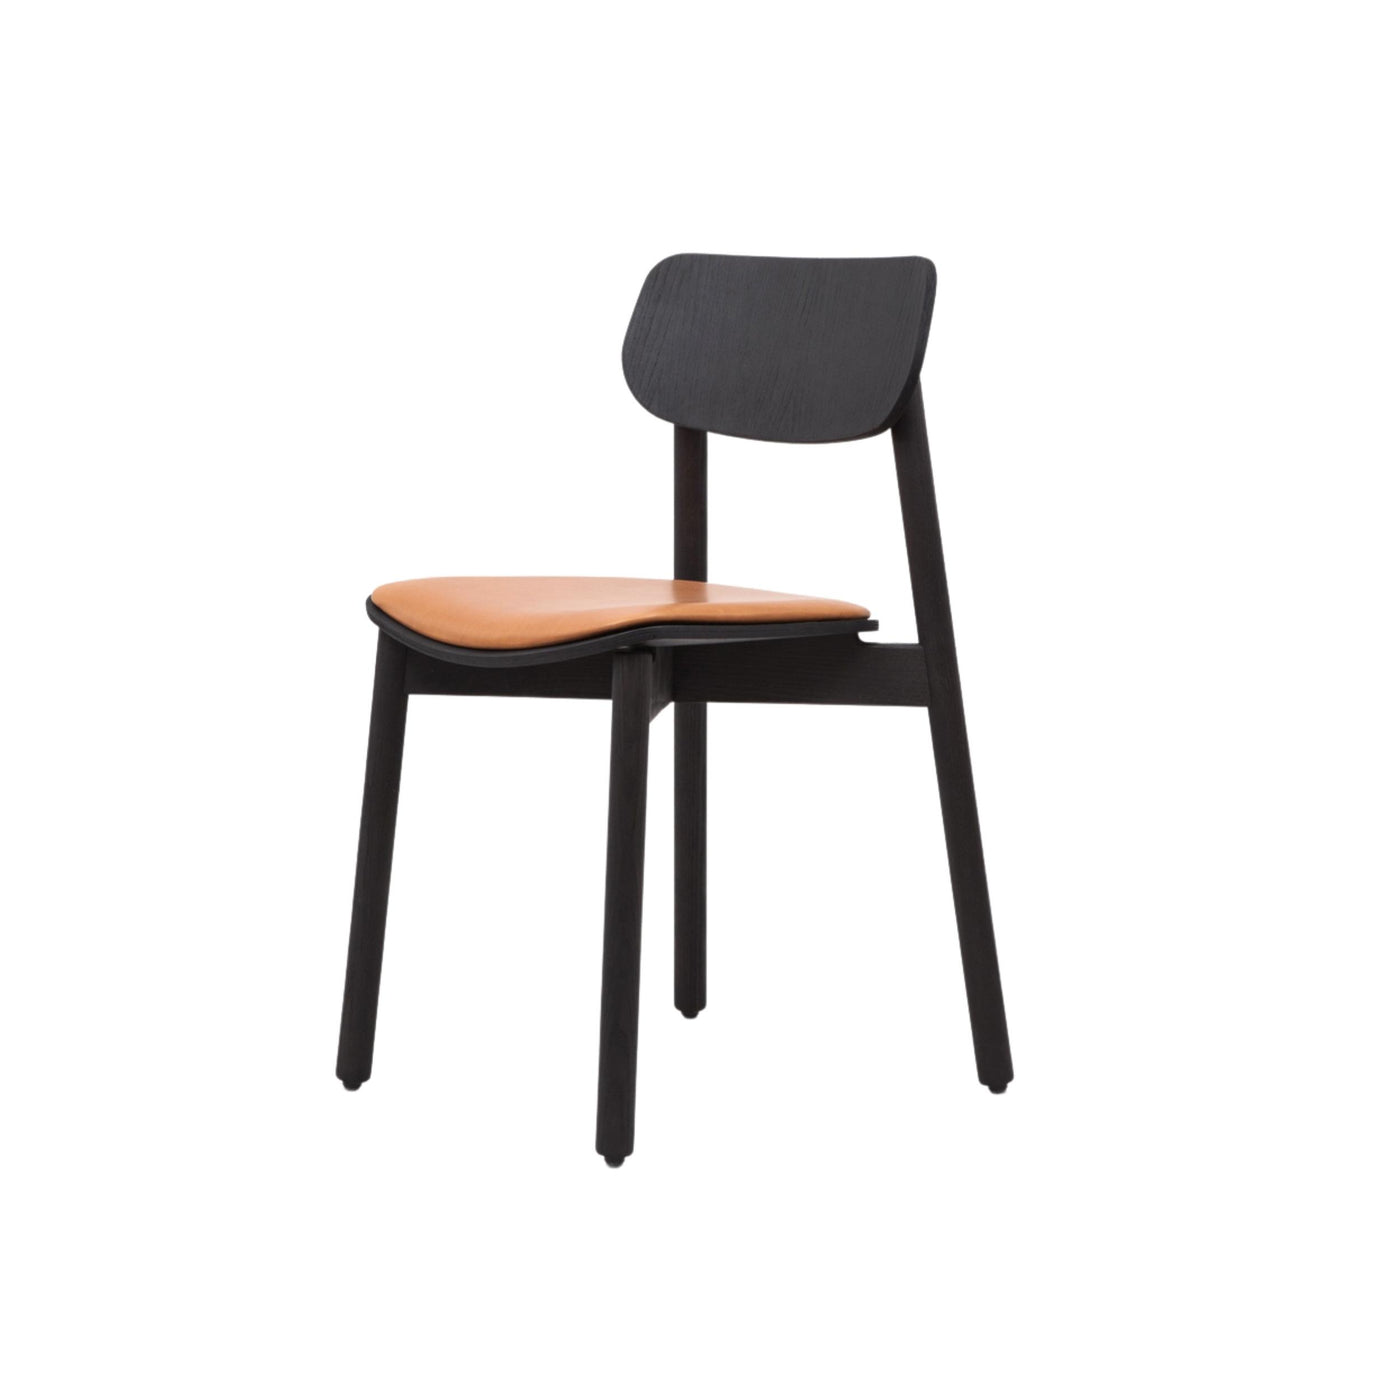 John Green Otis Chair Upholstered. British design at someday designs. #seat_pad_cognac-leather